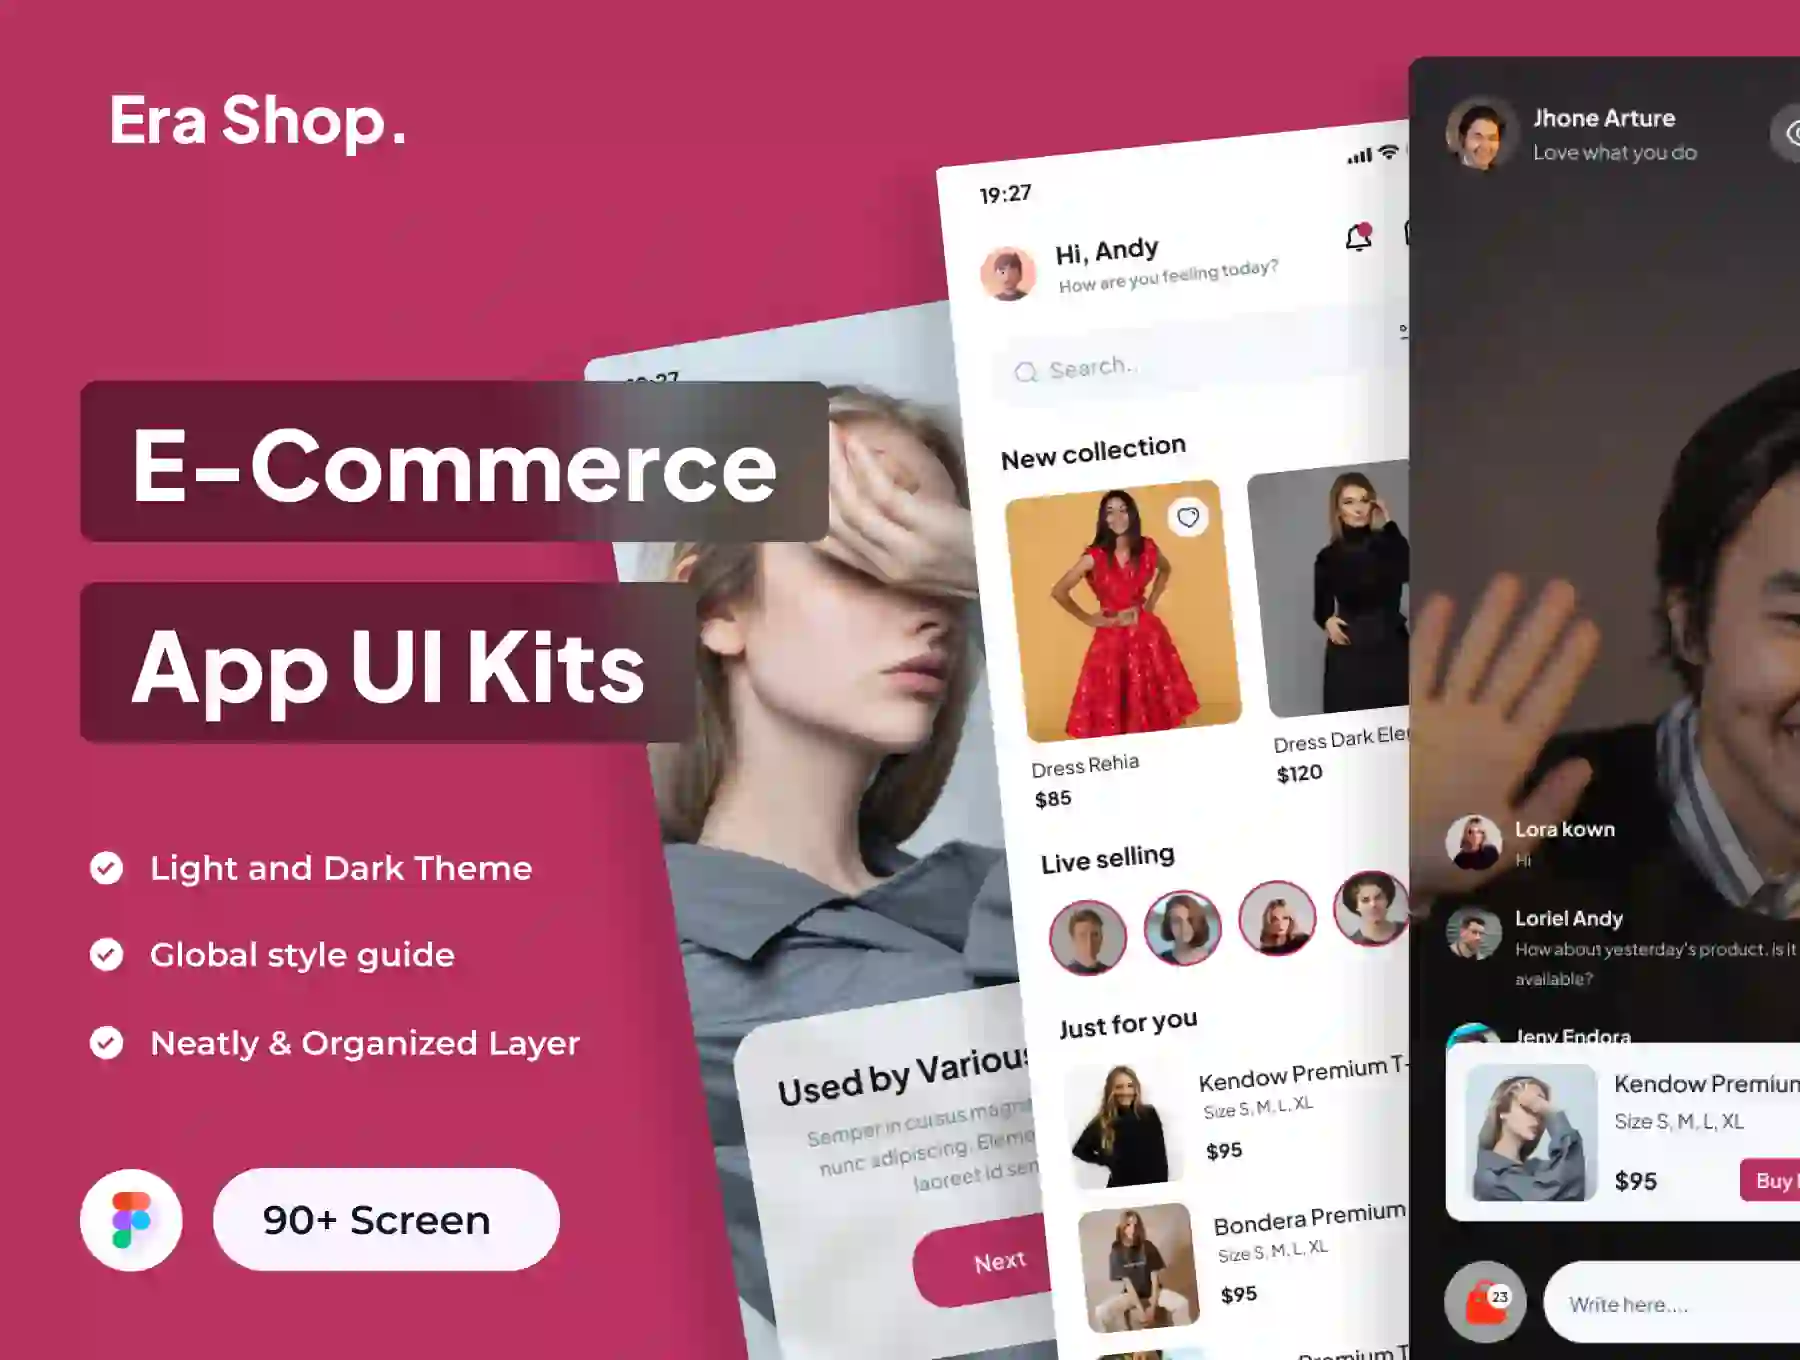 Era Shop - E Commerce App UI Kits